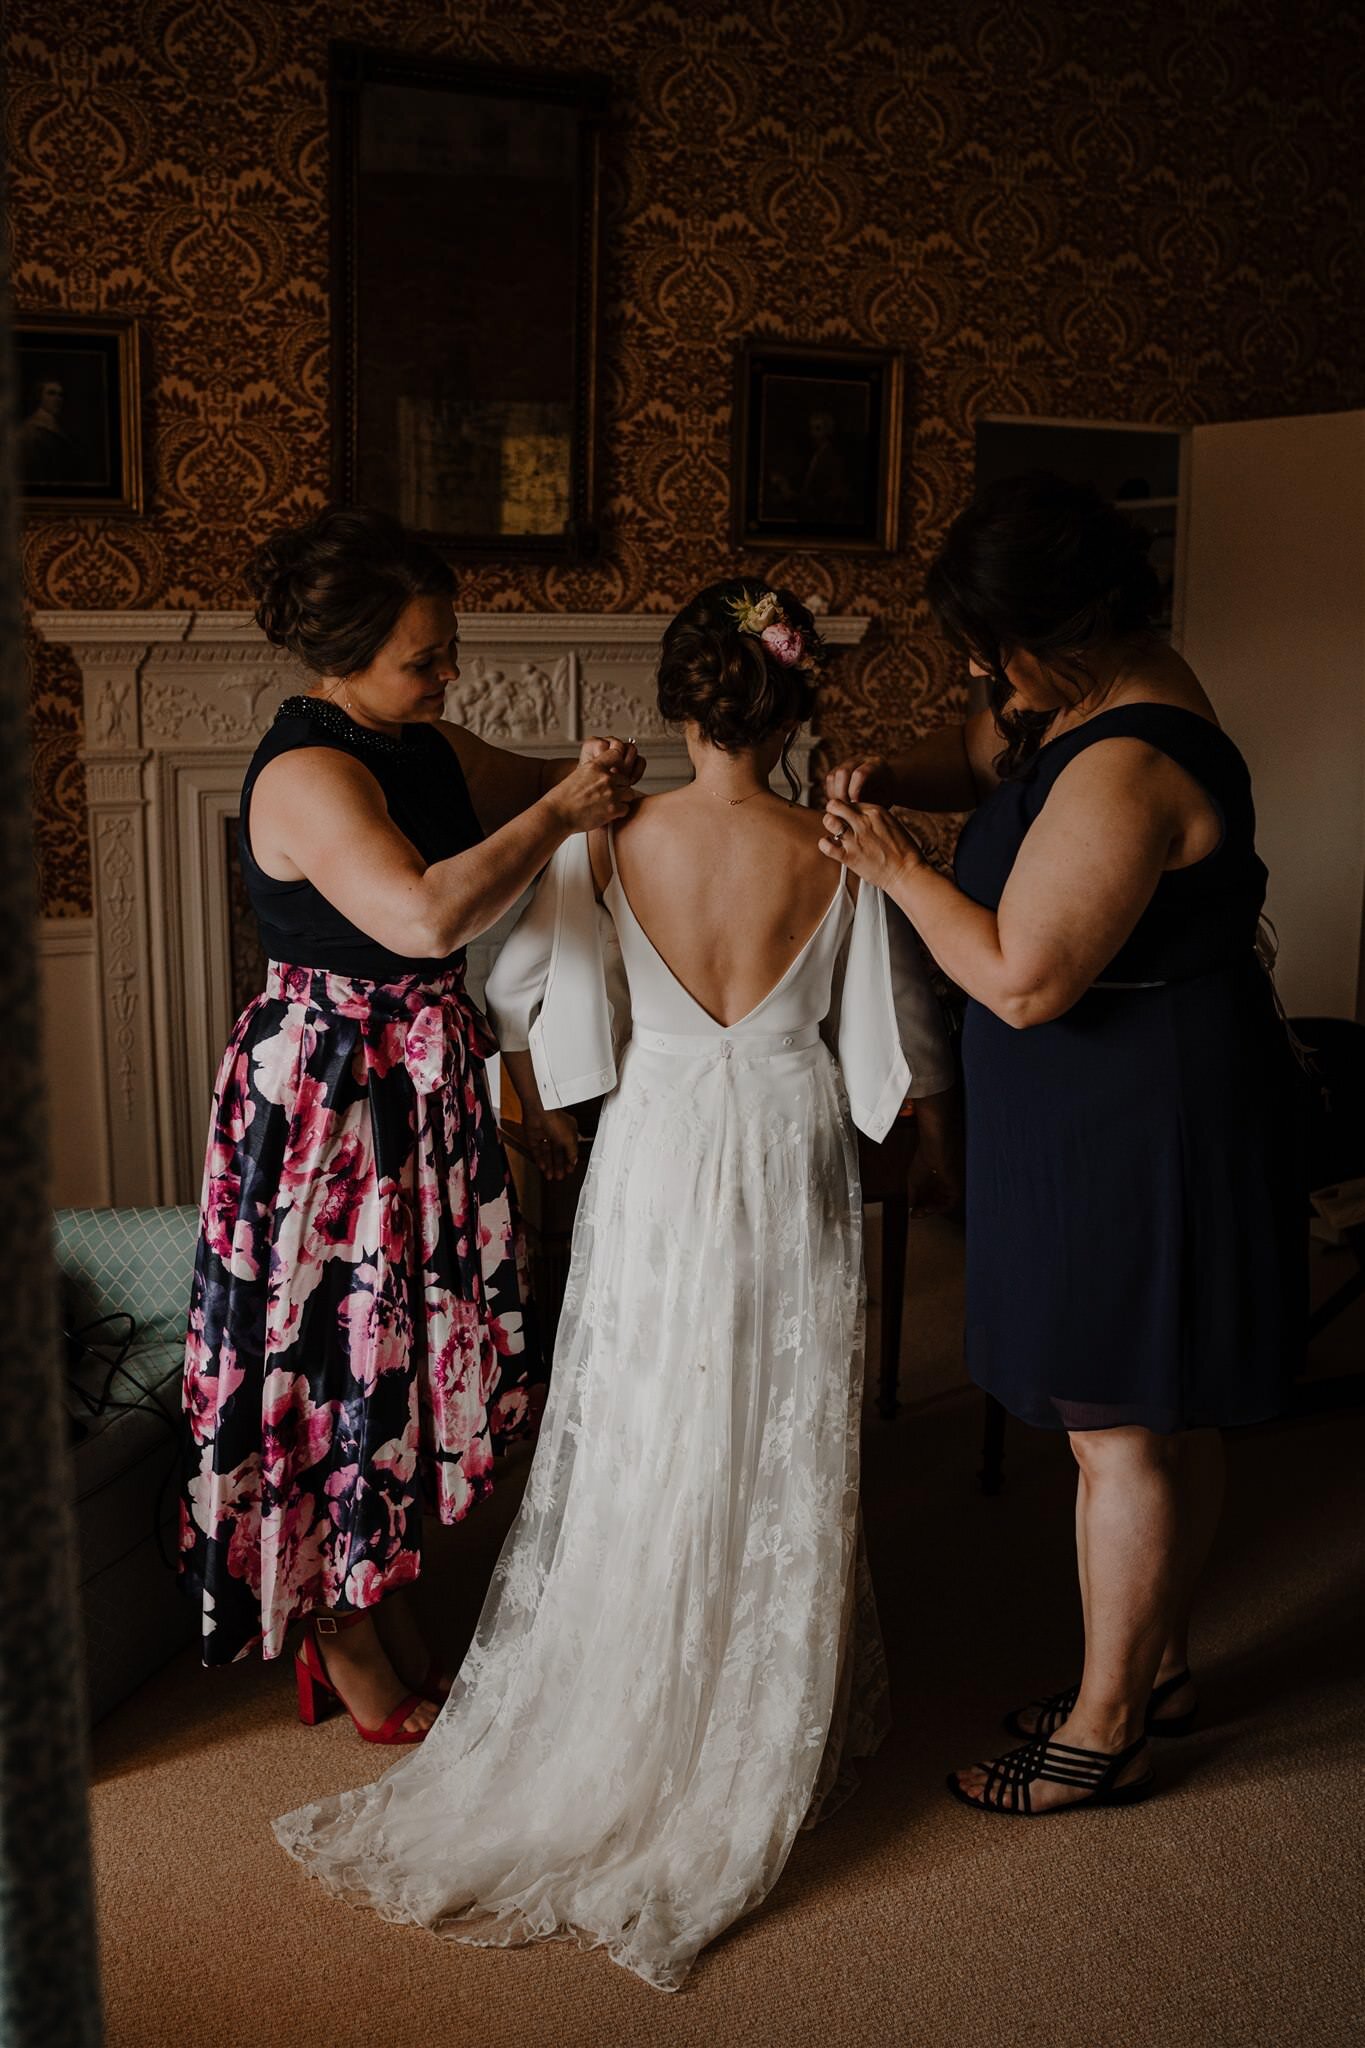 Bridesmaids help Bride get dressed in Charlie Brear wedding dress The West Wing Crom Castle